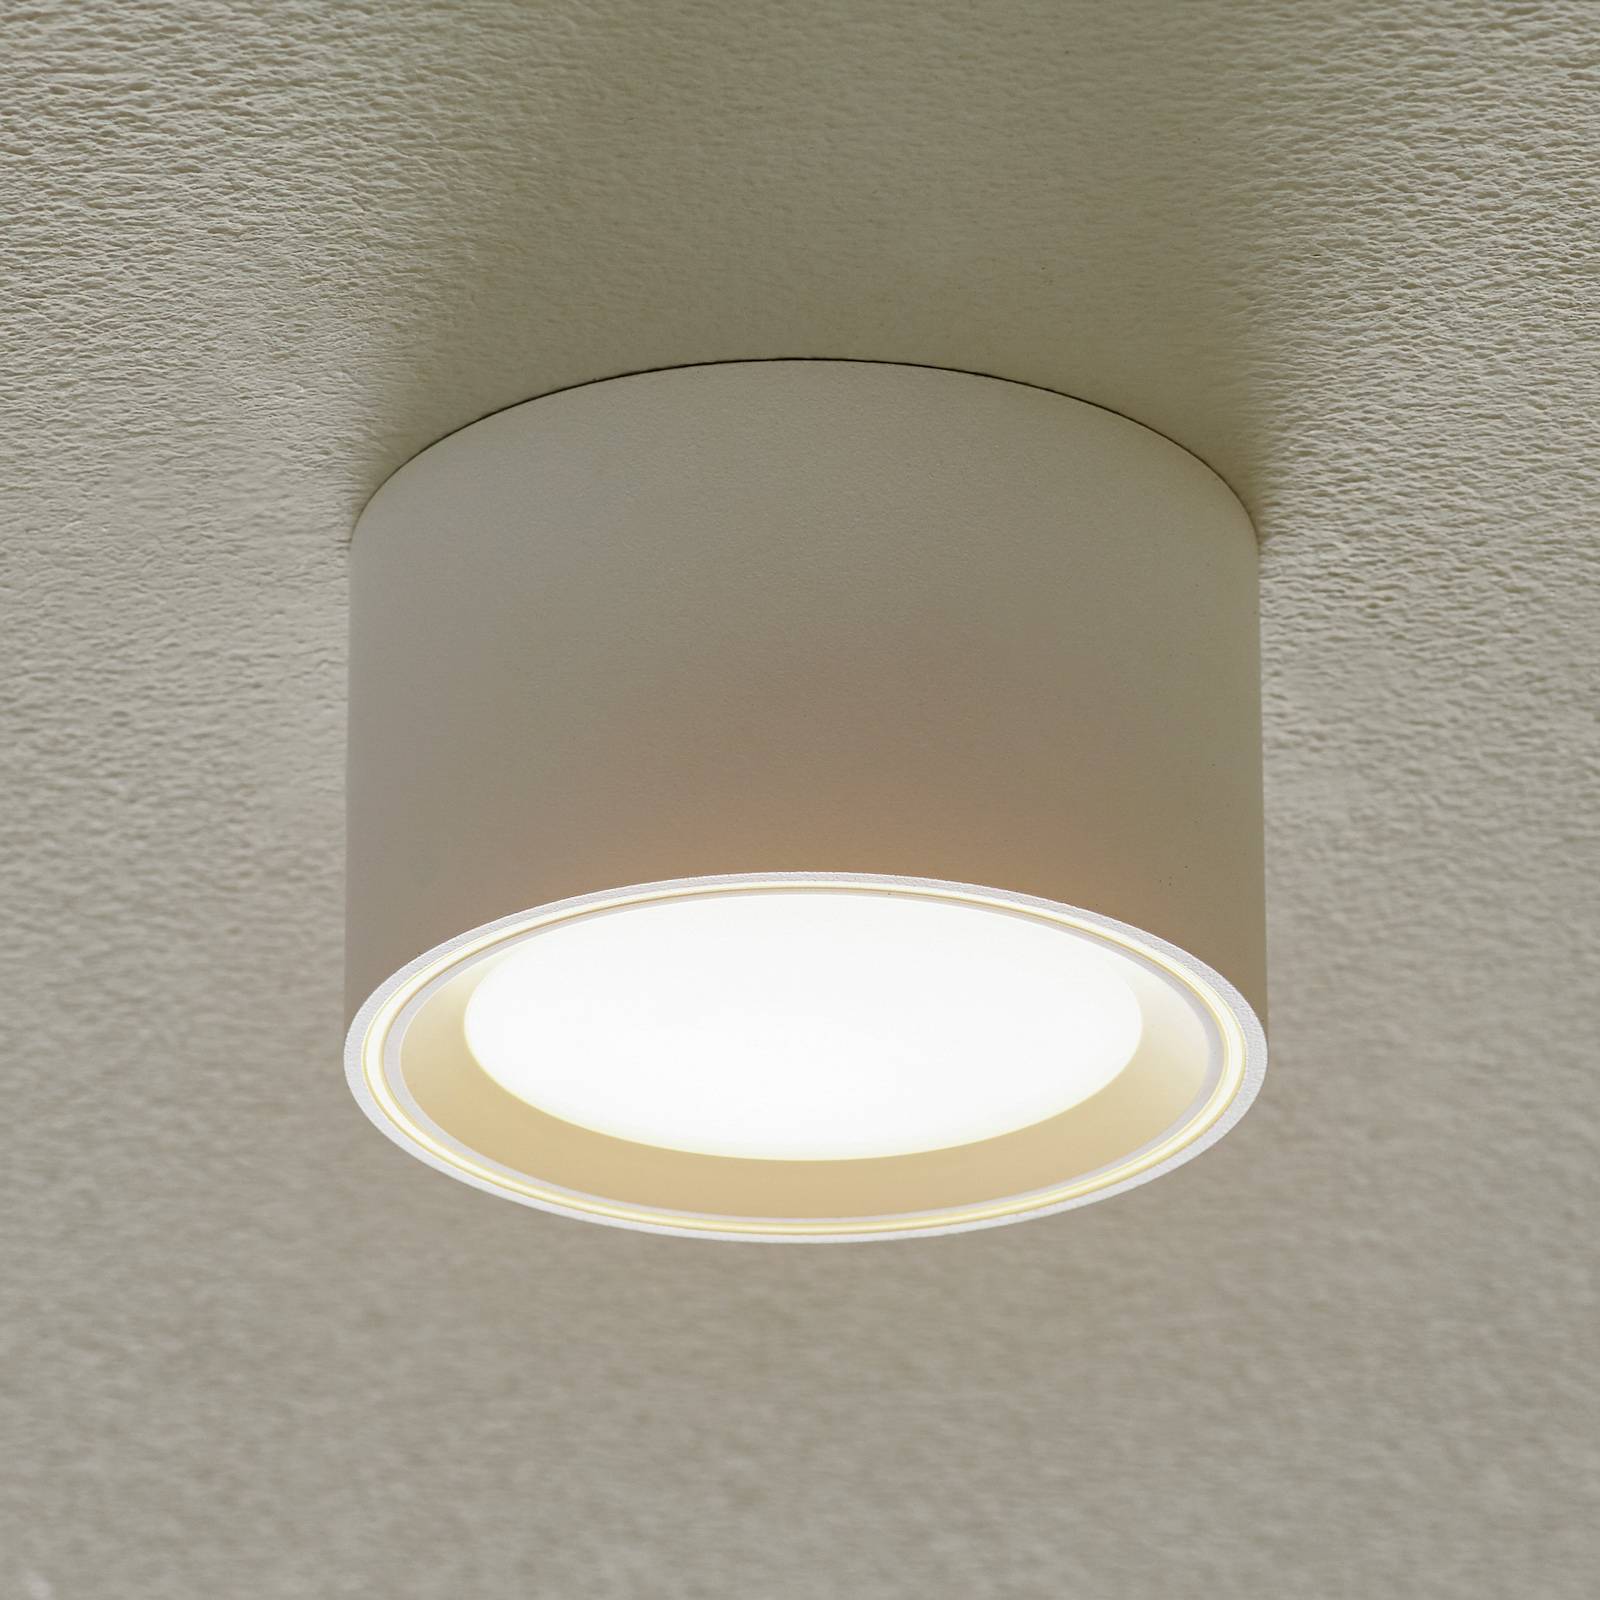 Lampa sufitowa LED Fallon, wysokość 6 cm